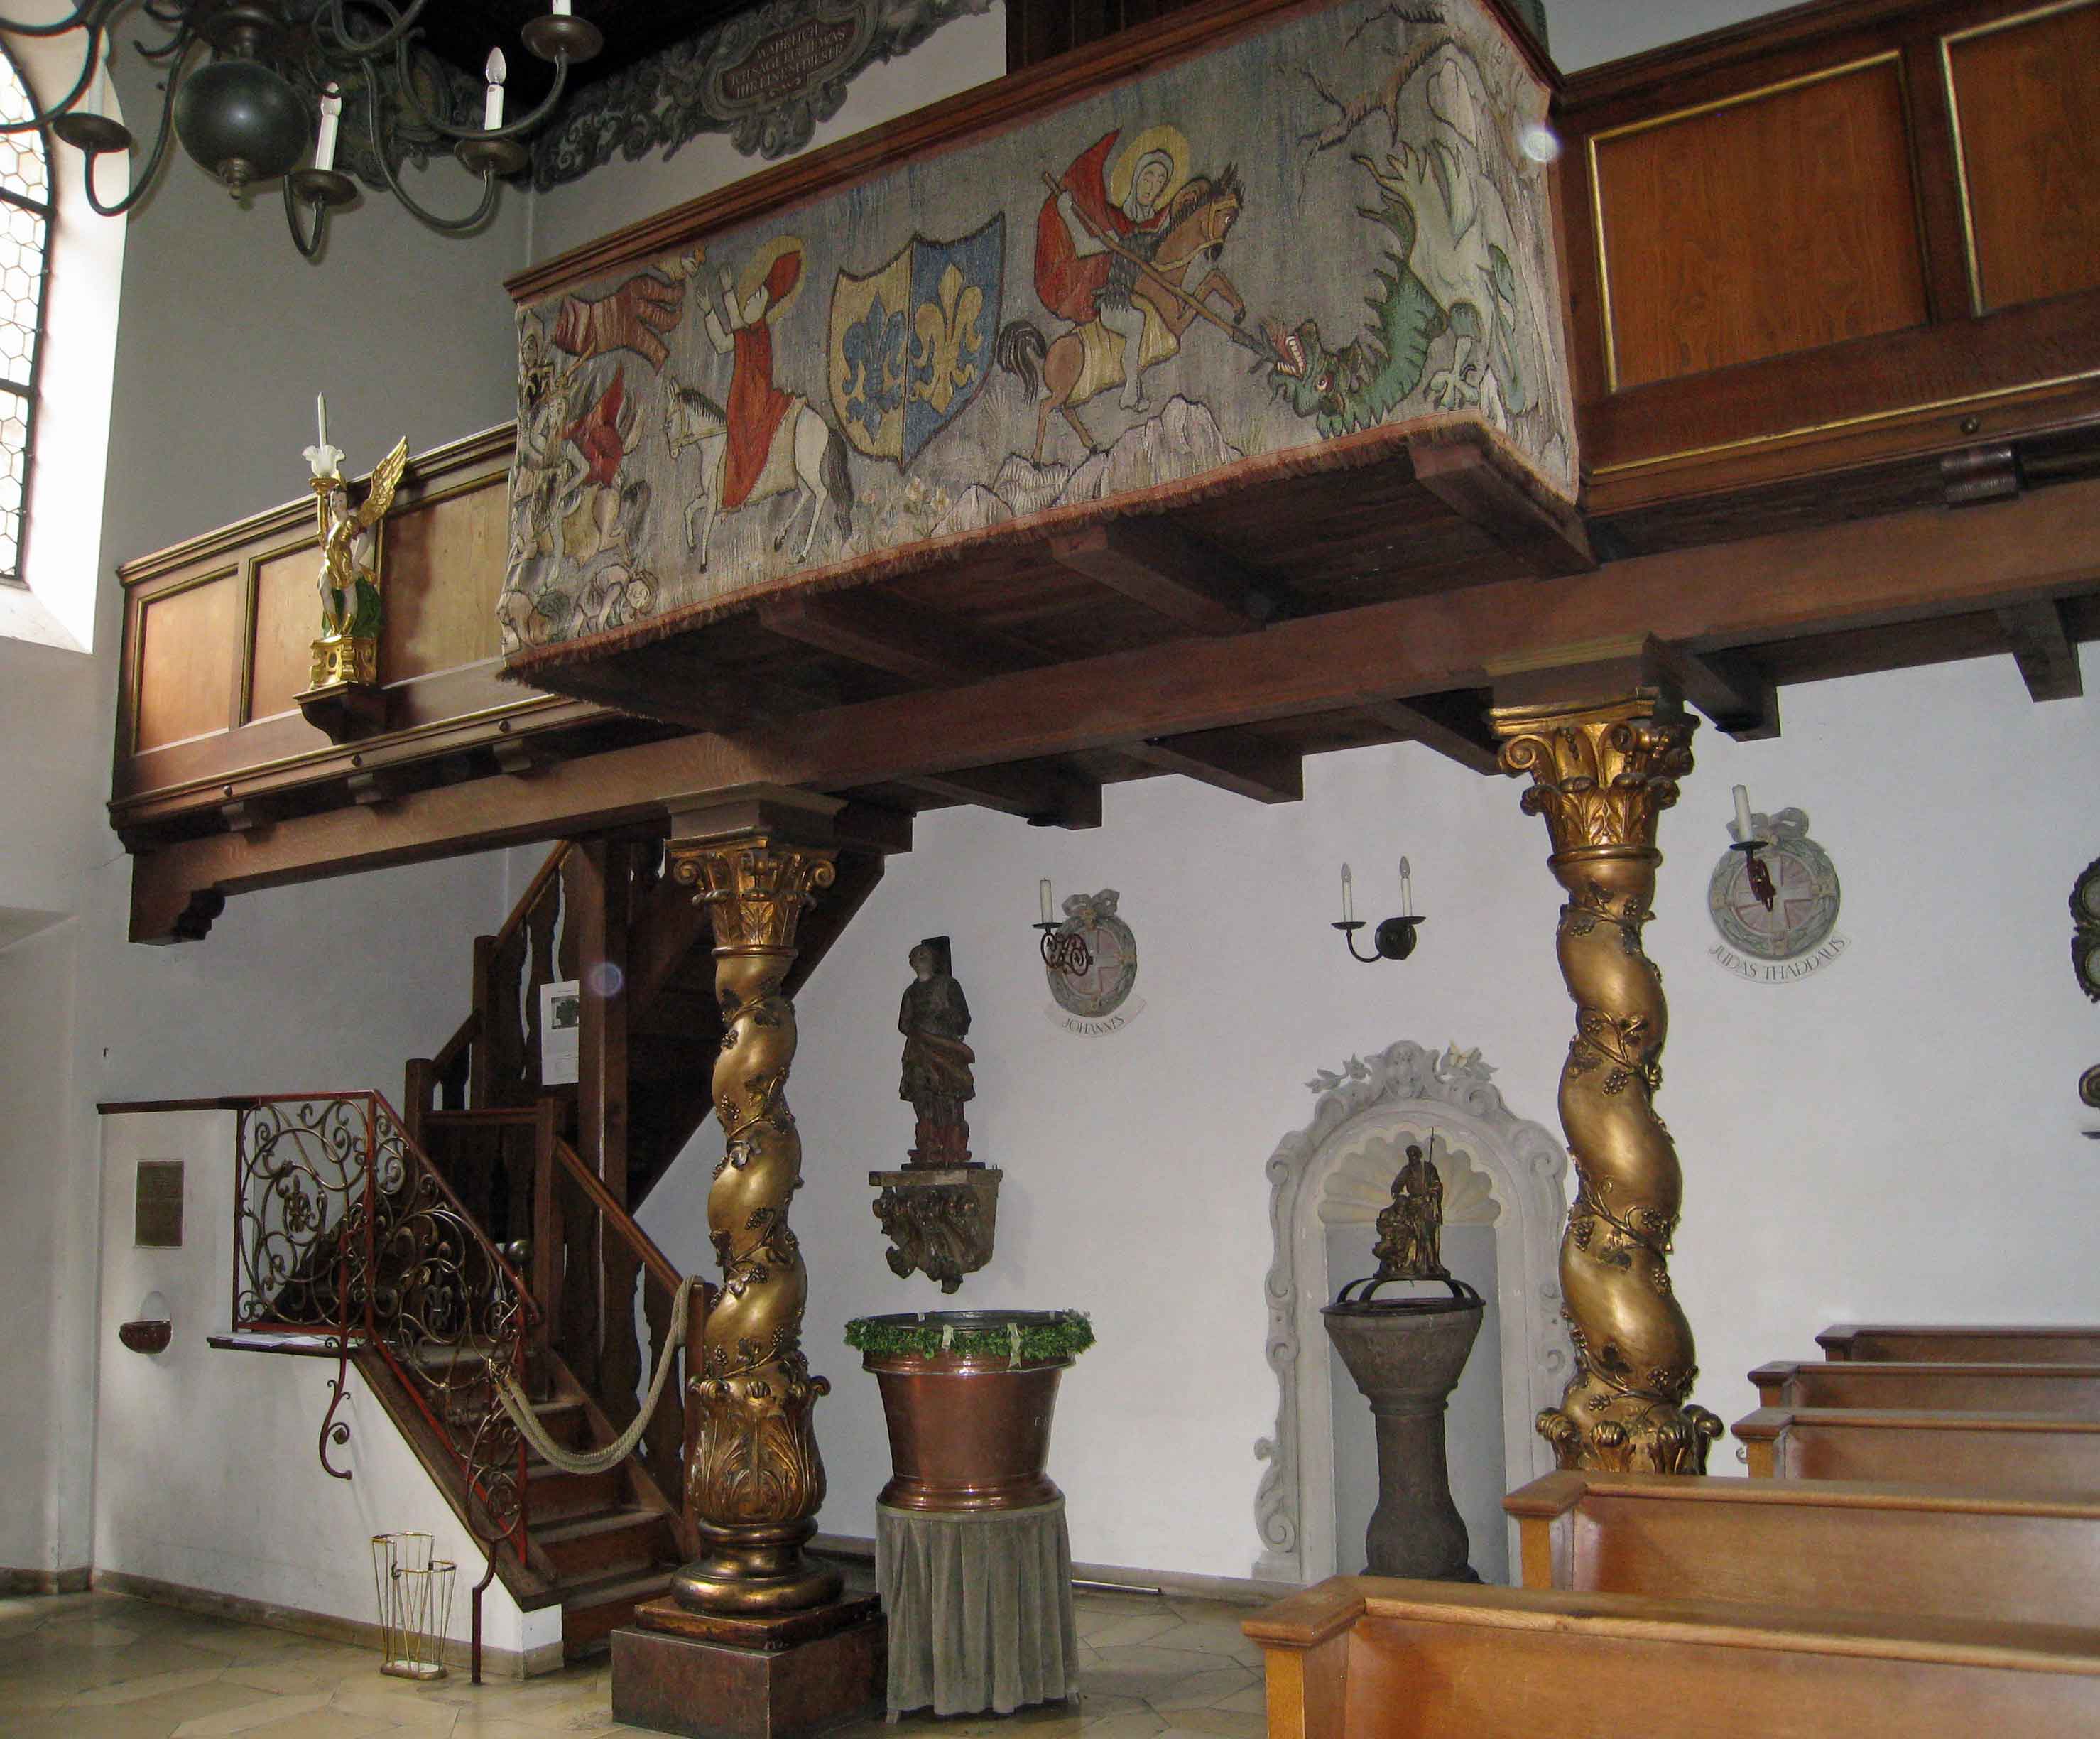  Renaissance baptismal font - Fuggerei village Augsburg.